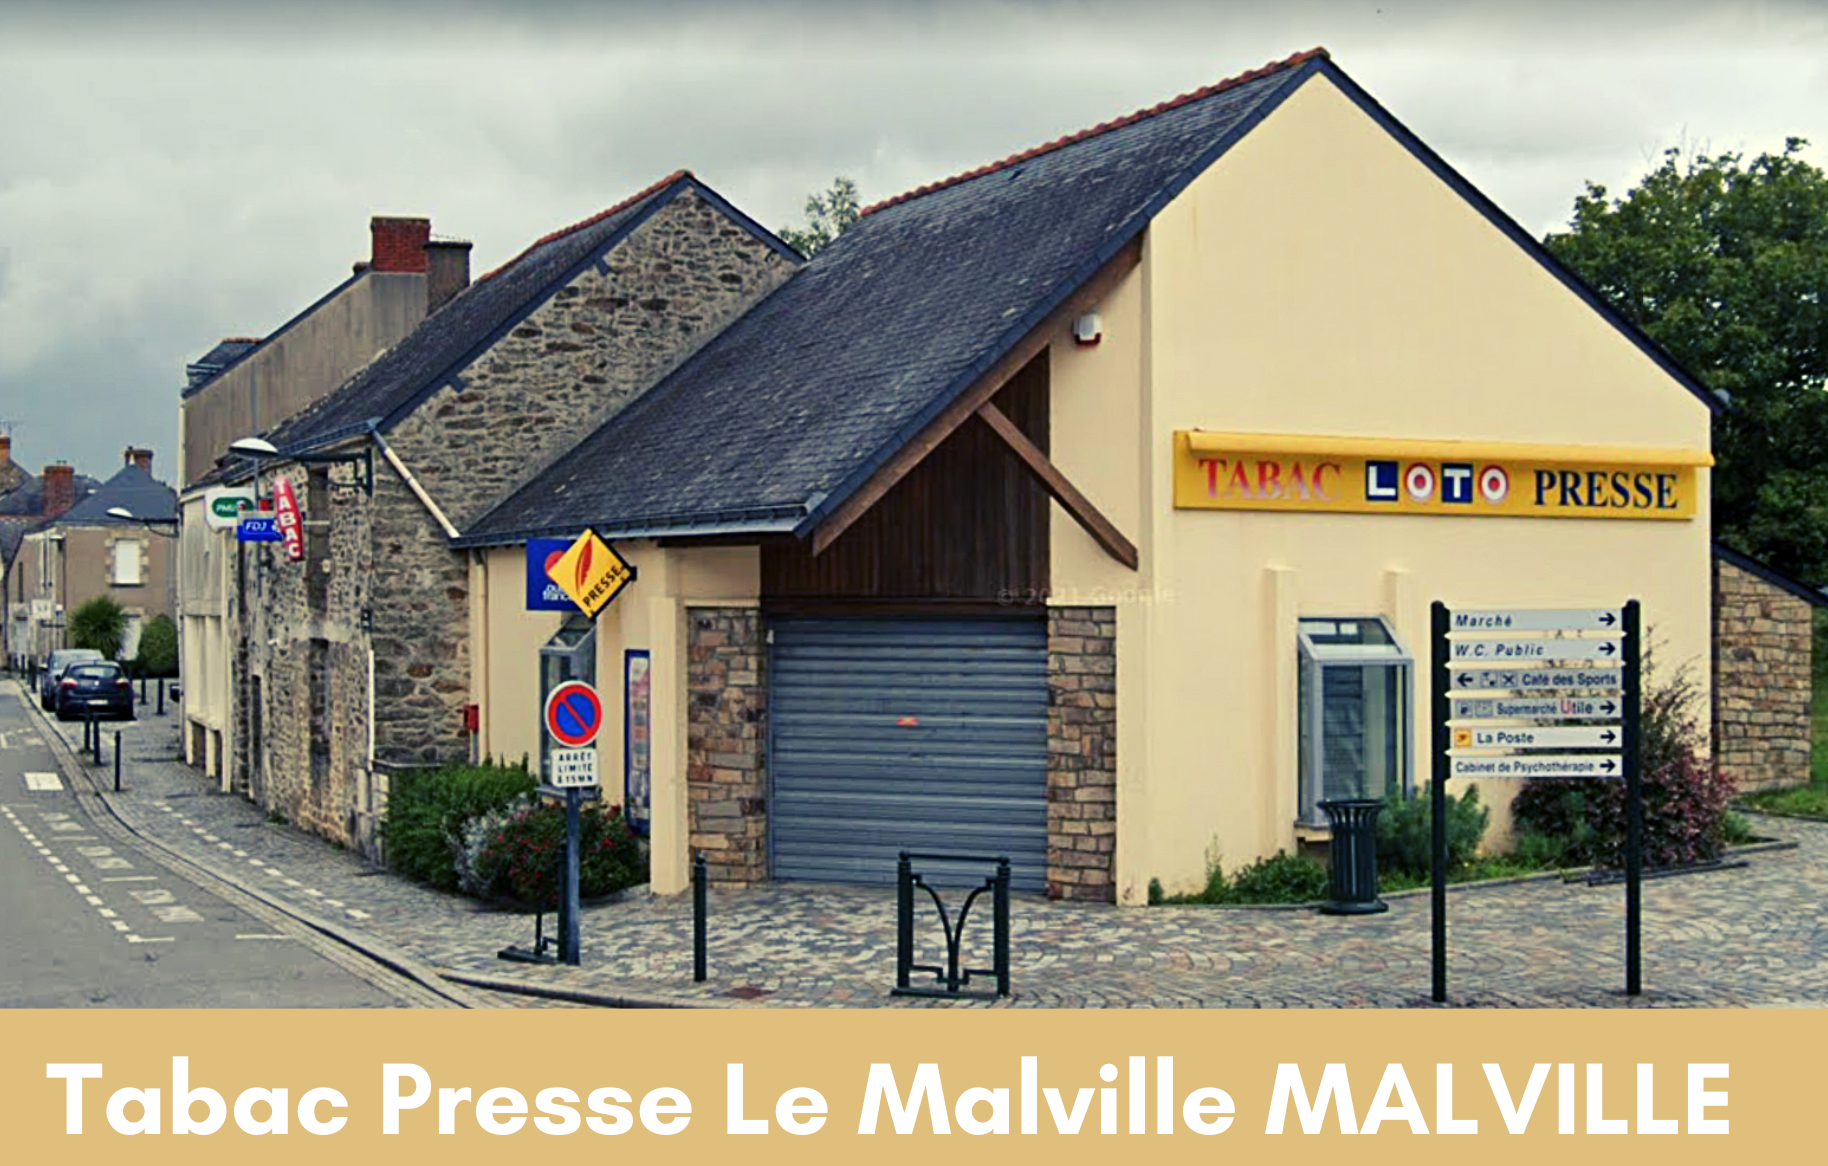 Tabac Presse Le Malville MALVILLE